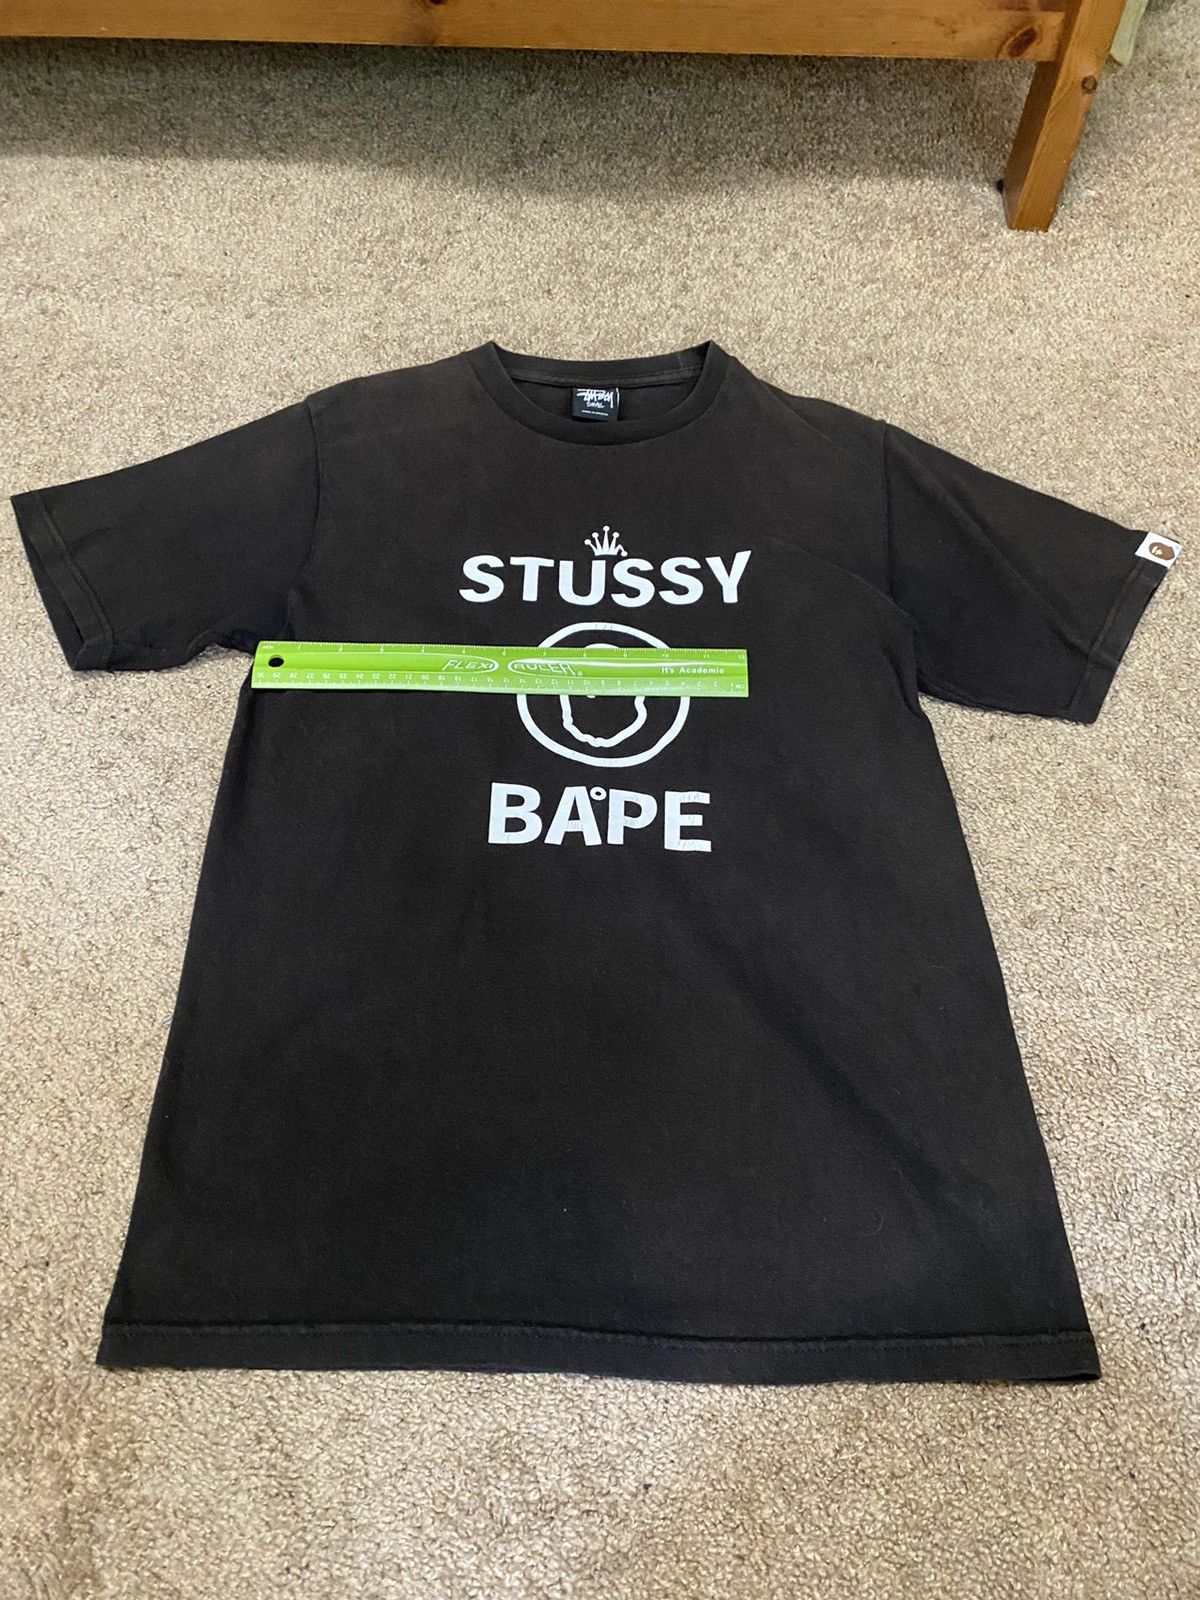 Bape Stussy X Bape First Collab T Shirt Men sz S Vintage 2010 Size US S / EU 44-46 / 1 - 7 Thumbnail